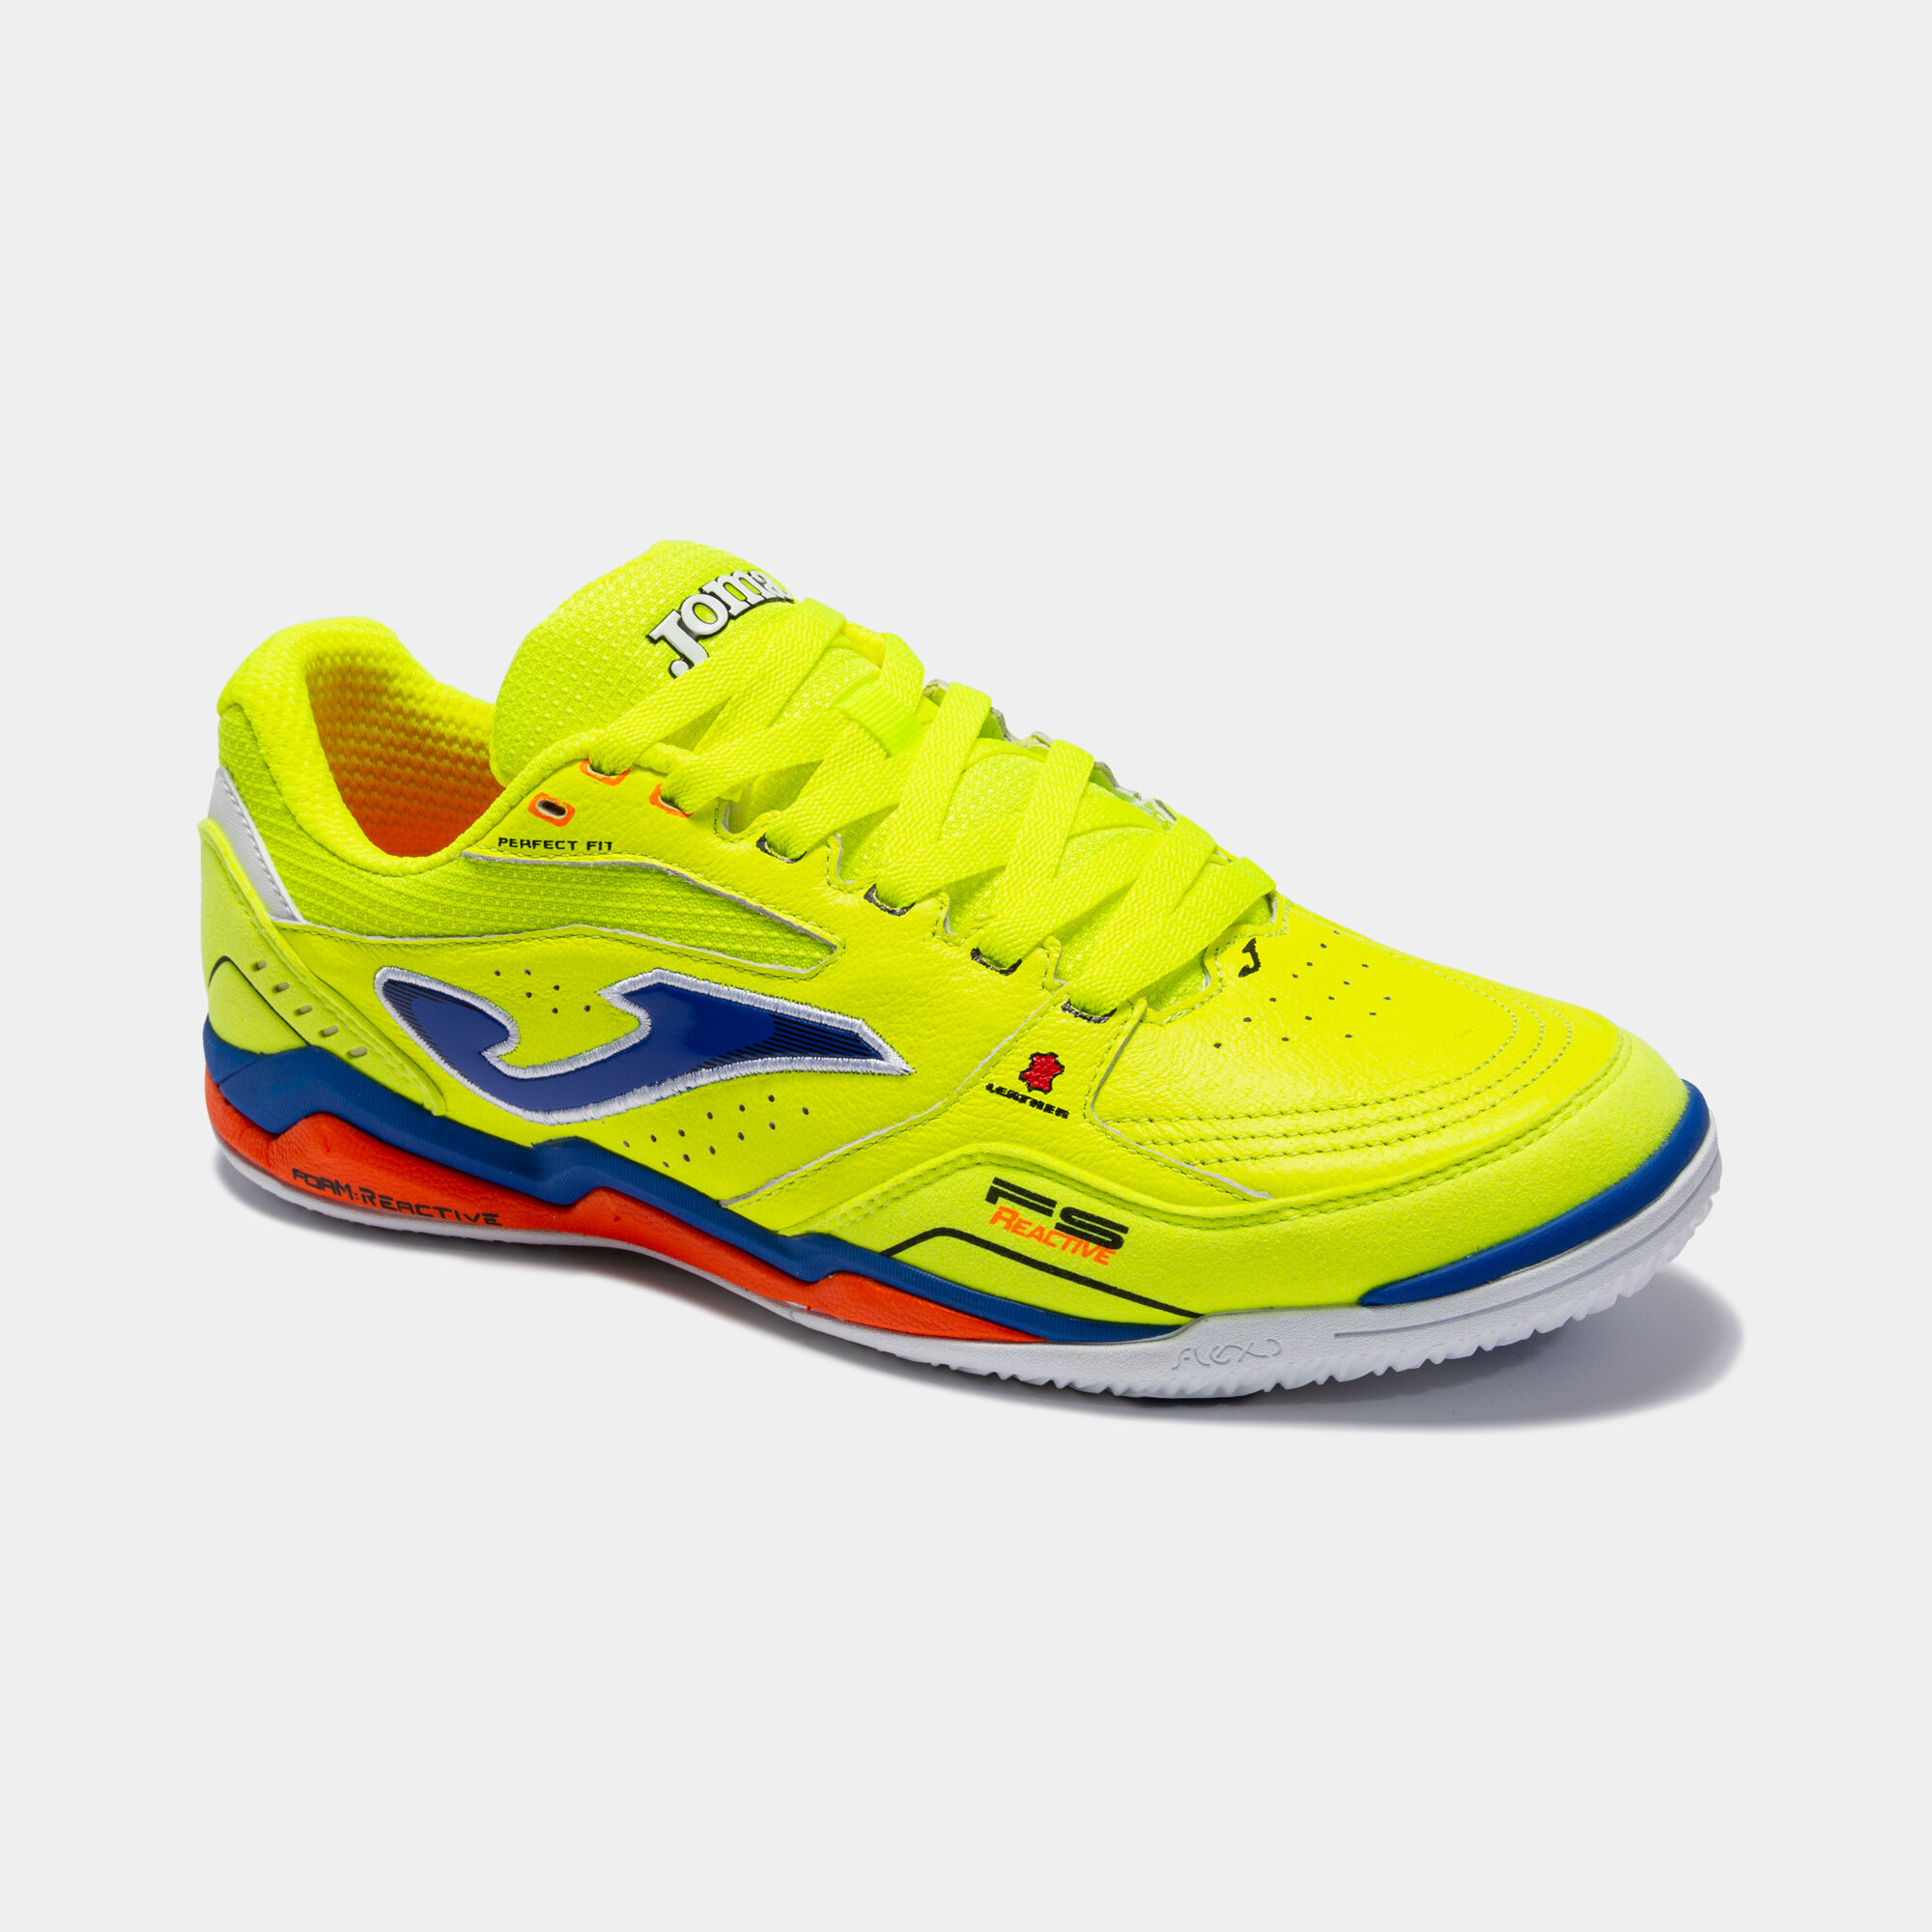 Futsal shoes Fs 22 indoor fluorescent yellow